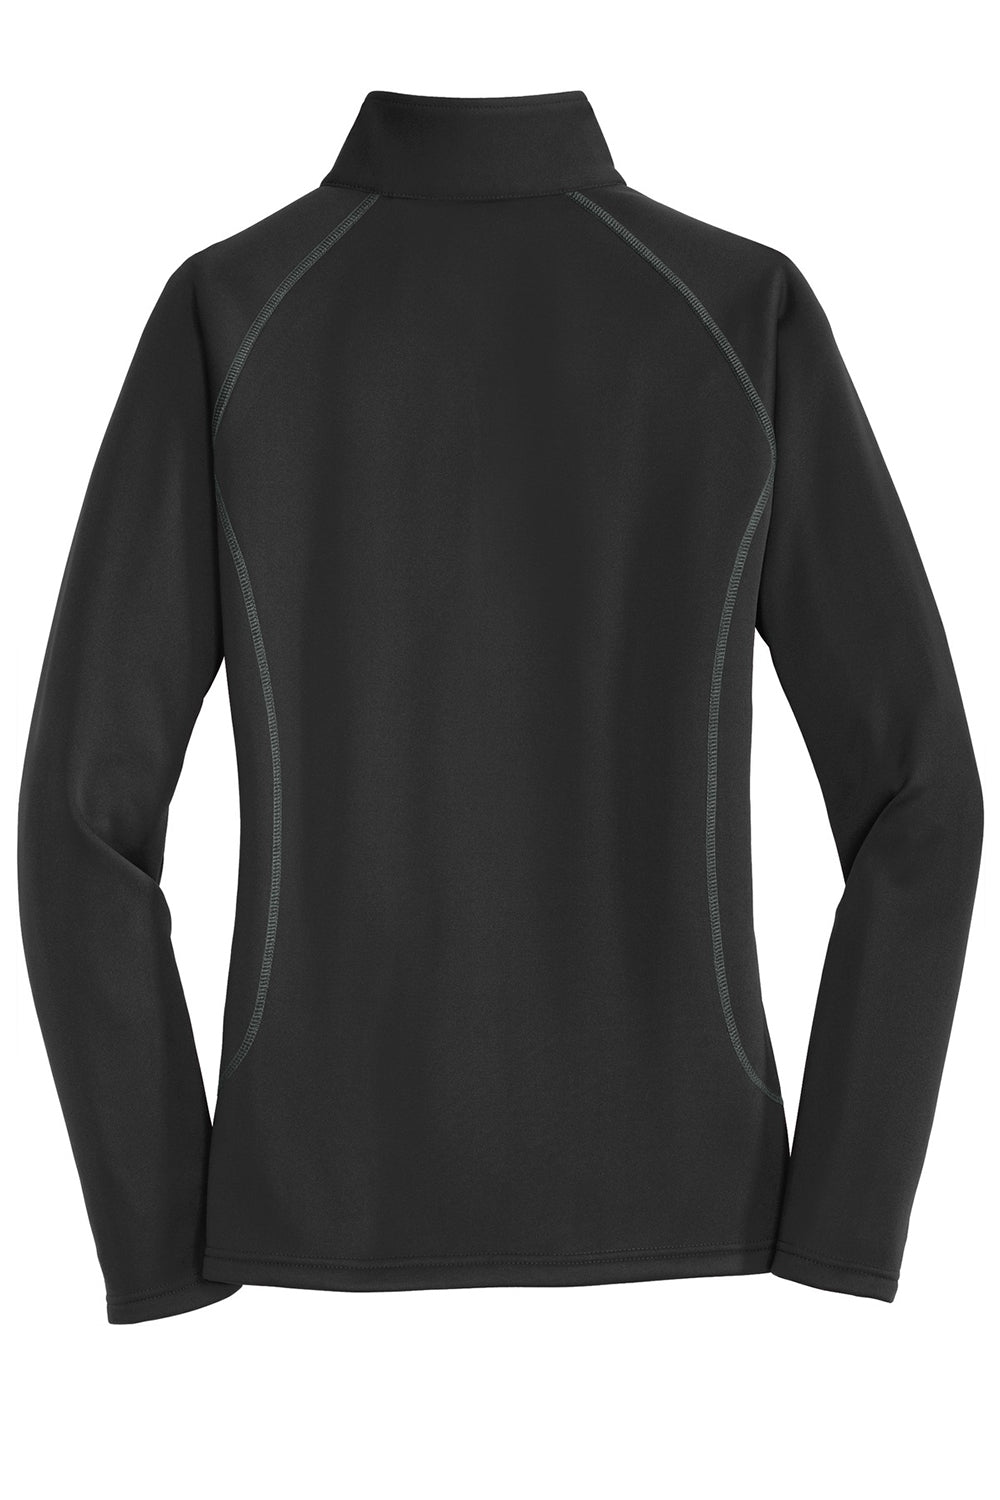 Eddie Bauer EB237 Womens Smooth Fleece 1/4 Zip Sweatshirt Black Flat Back